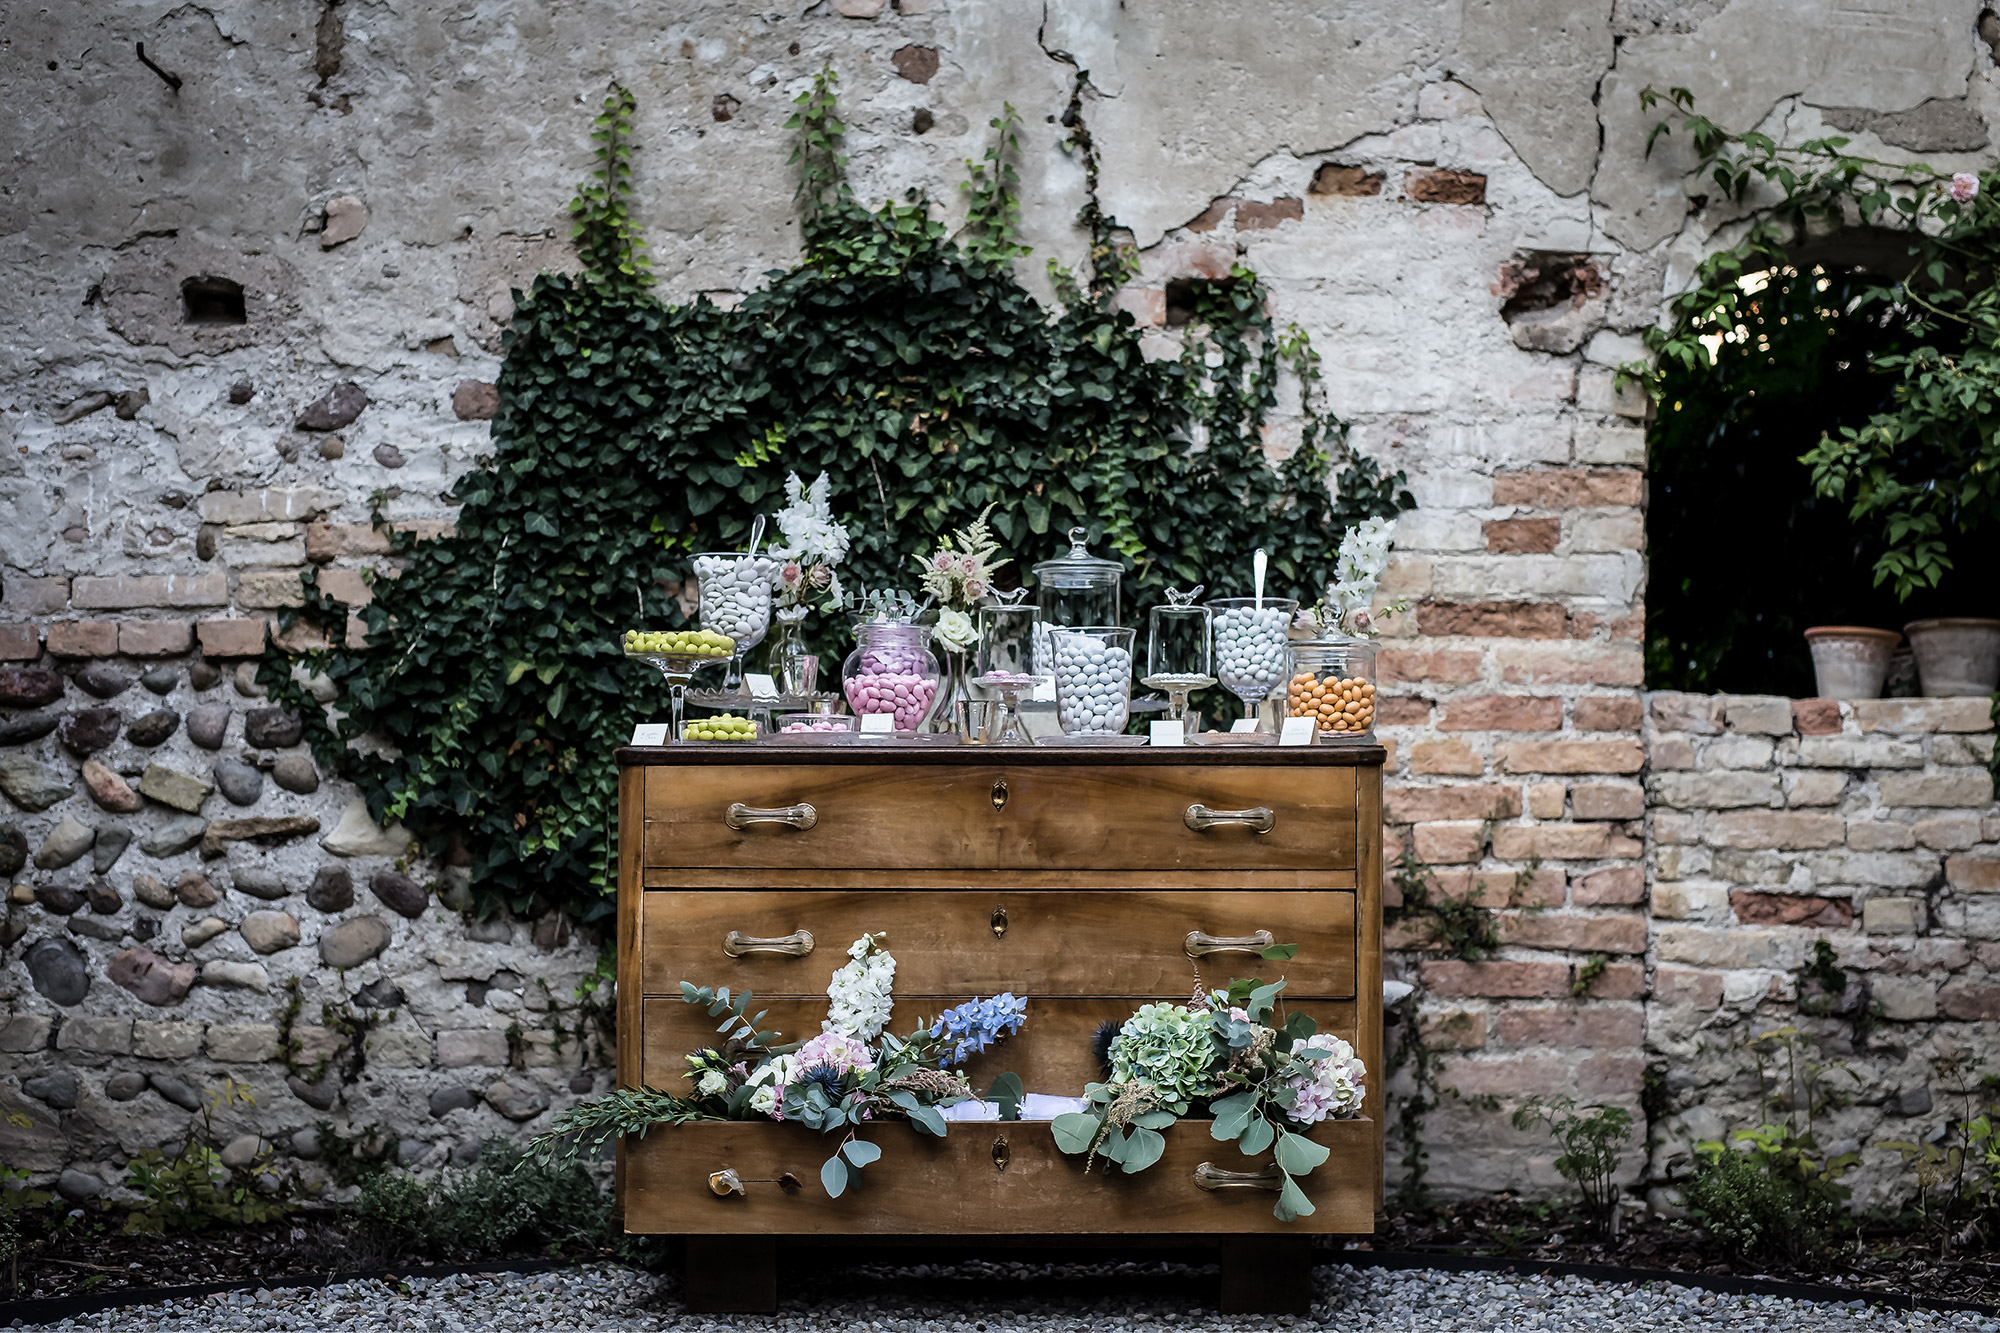 ..imagesweddings enmatrimonio convento annunciata petali bonbons wedding planner confettata by Photo27